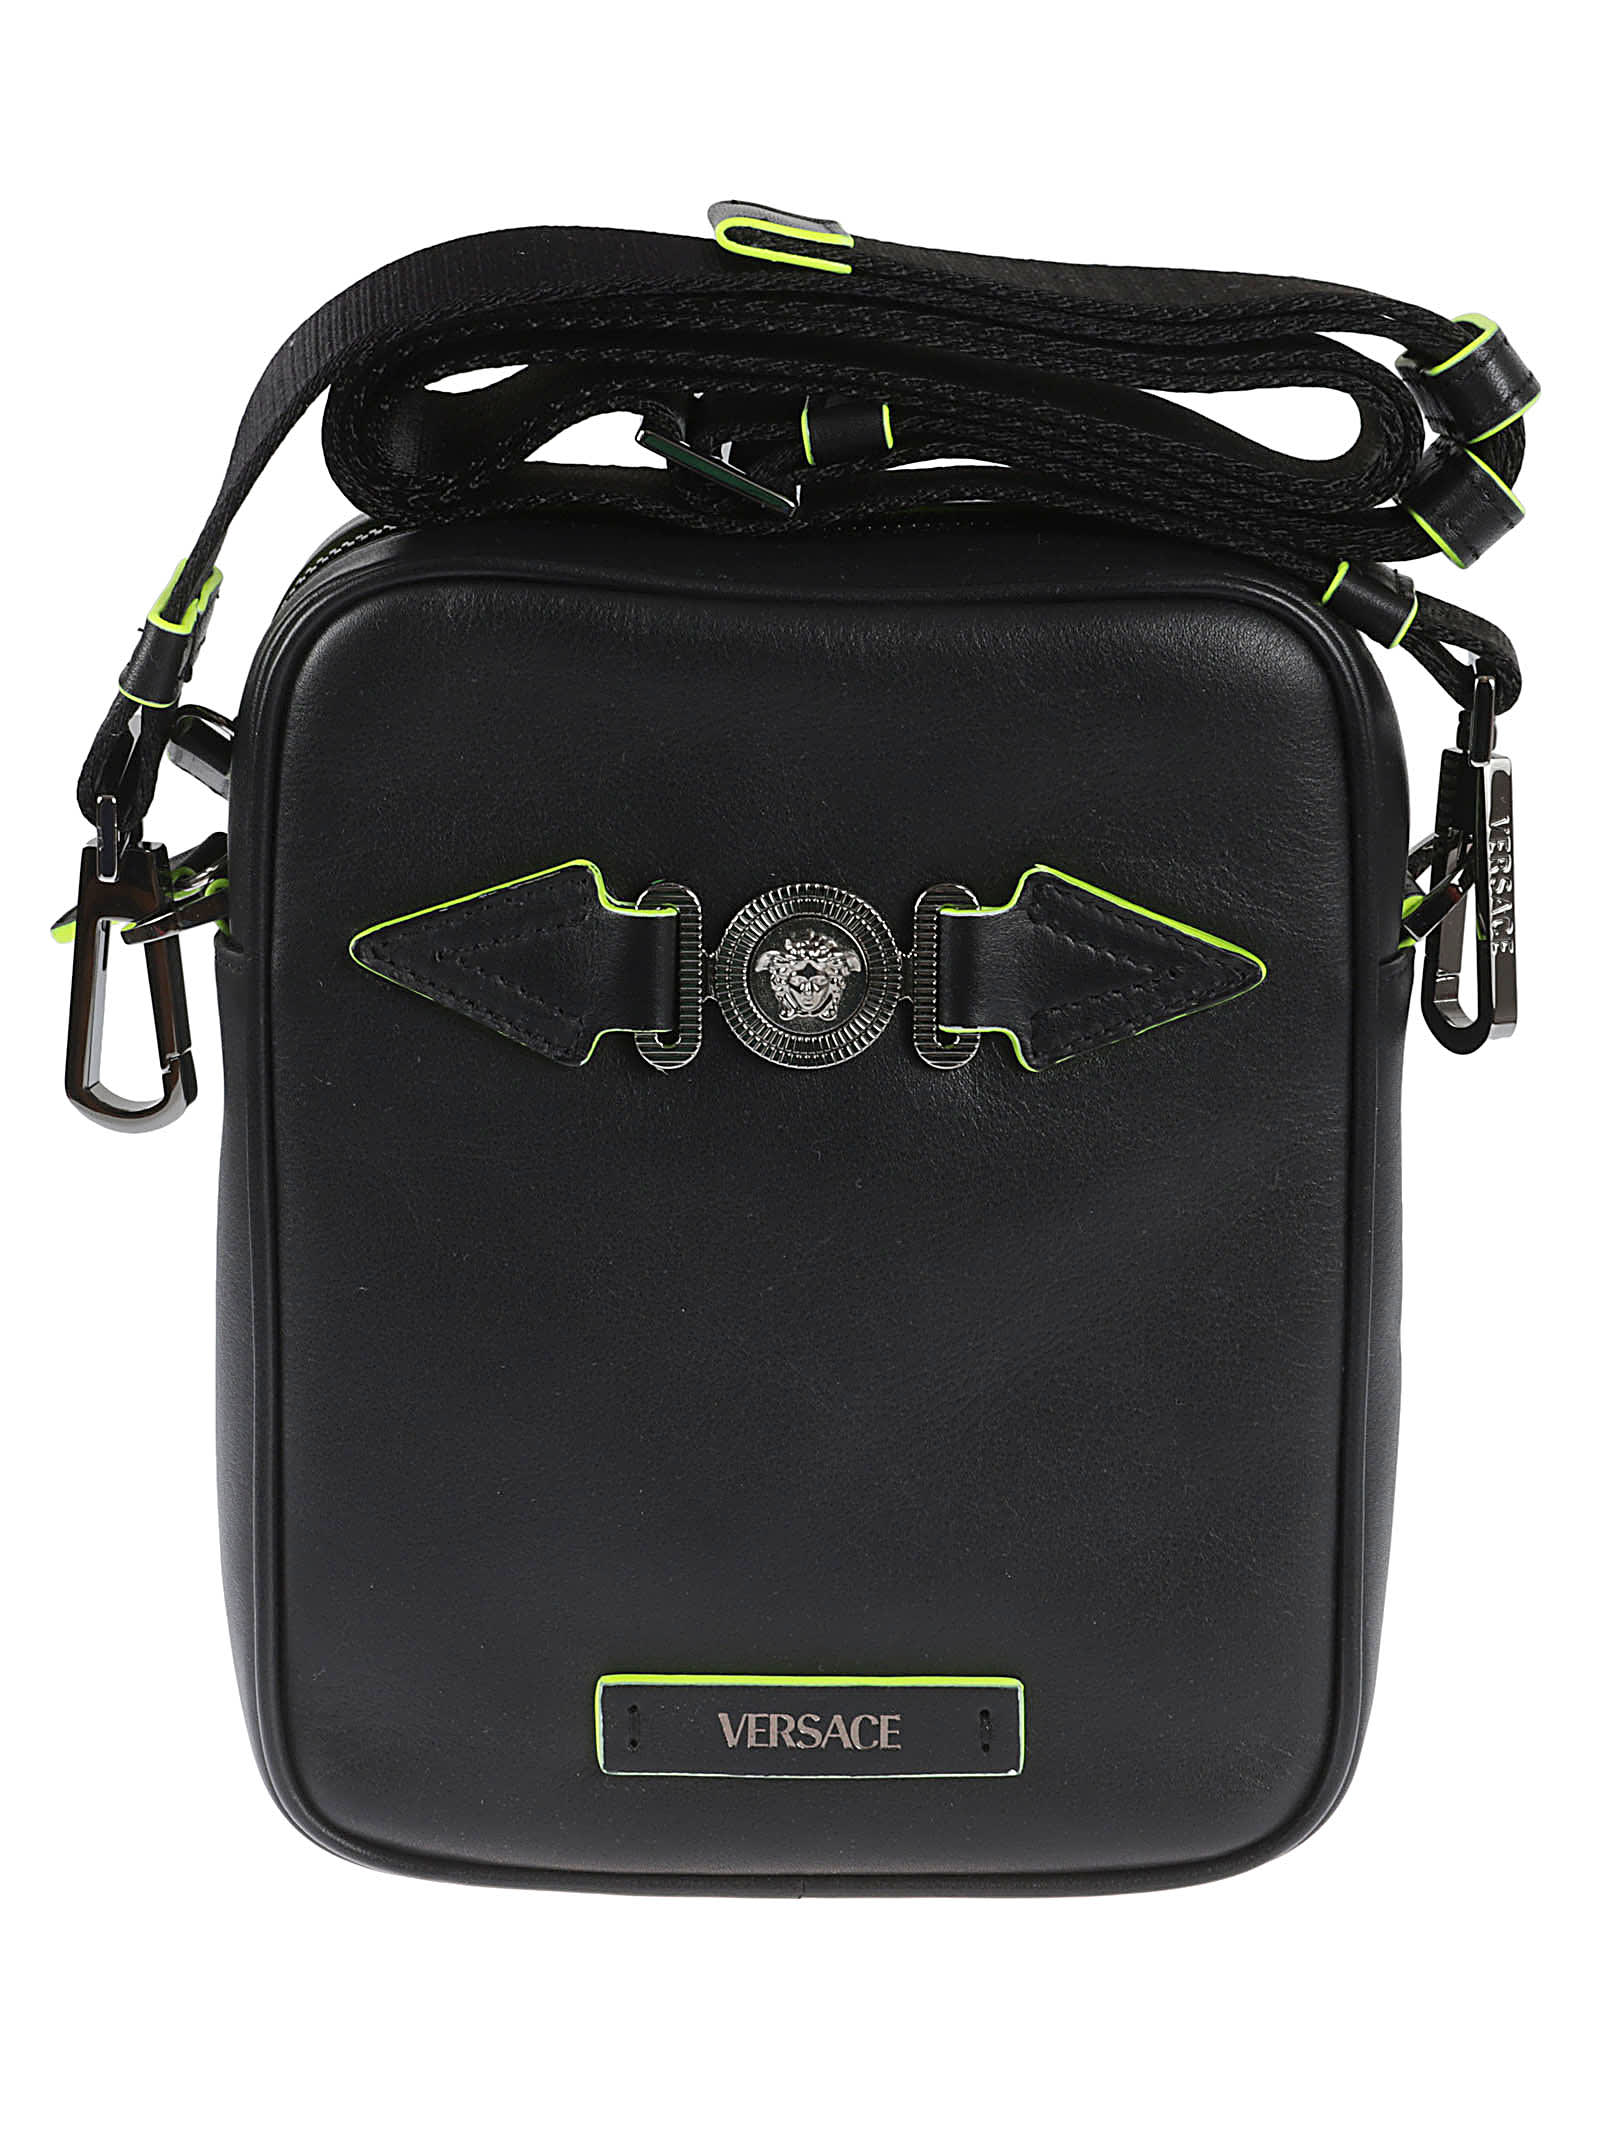 Versace Logo Patch Arrow Shoulder Bag In Black/yellow